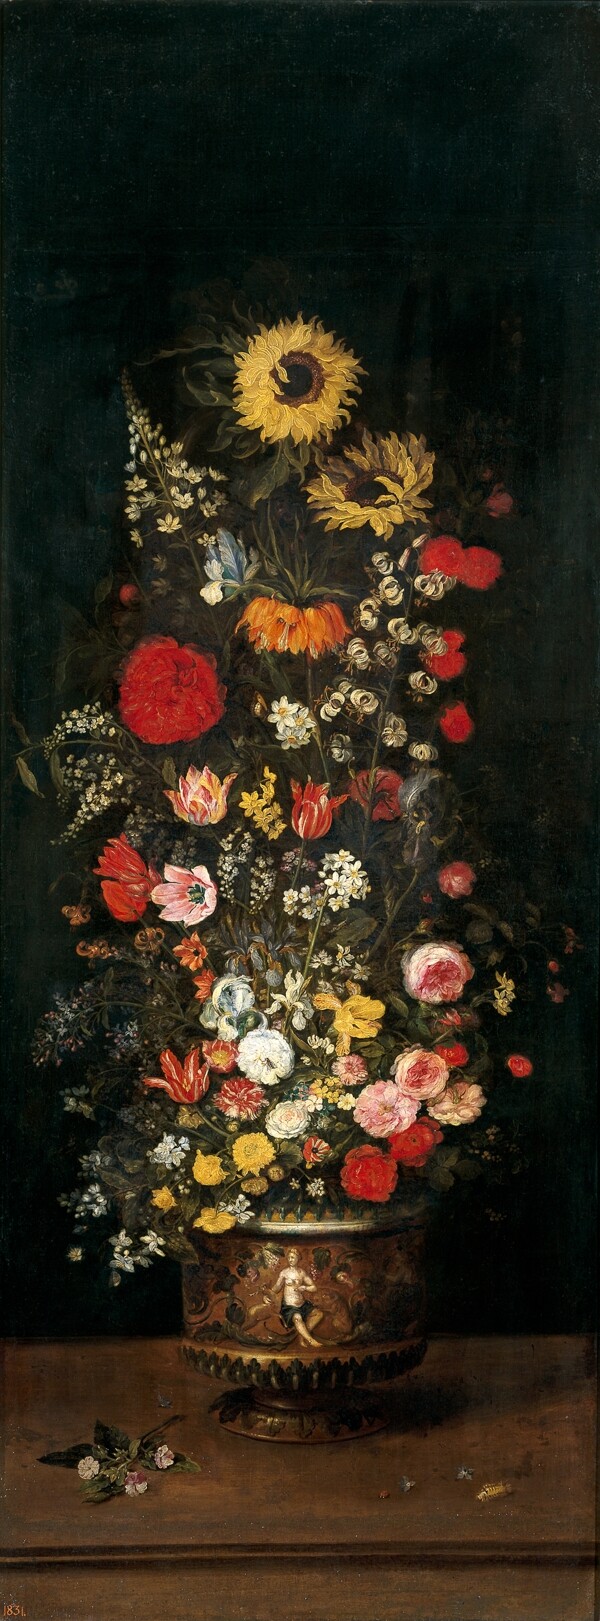 BruegheltheElderJanFloreroIIFirstquarterof17Century花卉水果蔬菜器皿静物印象画派写实主义油画装饰画